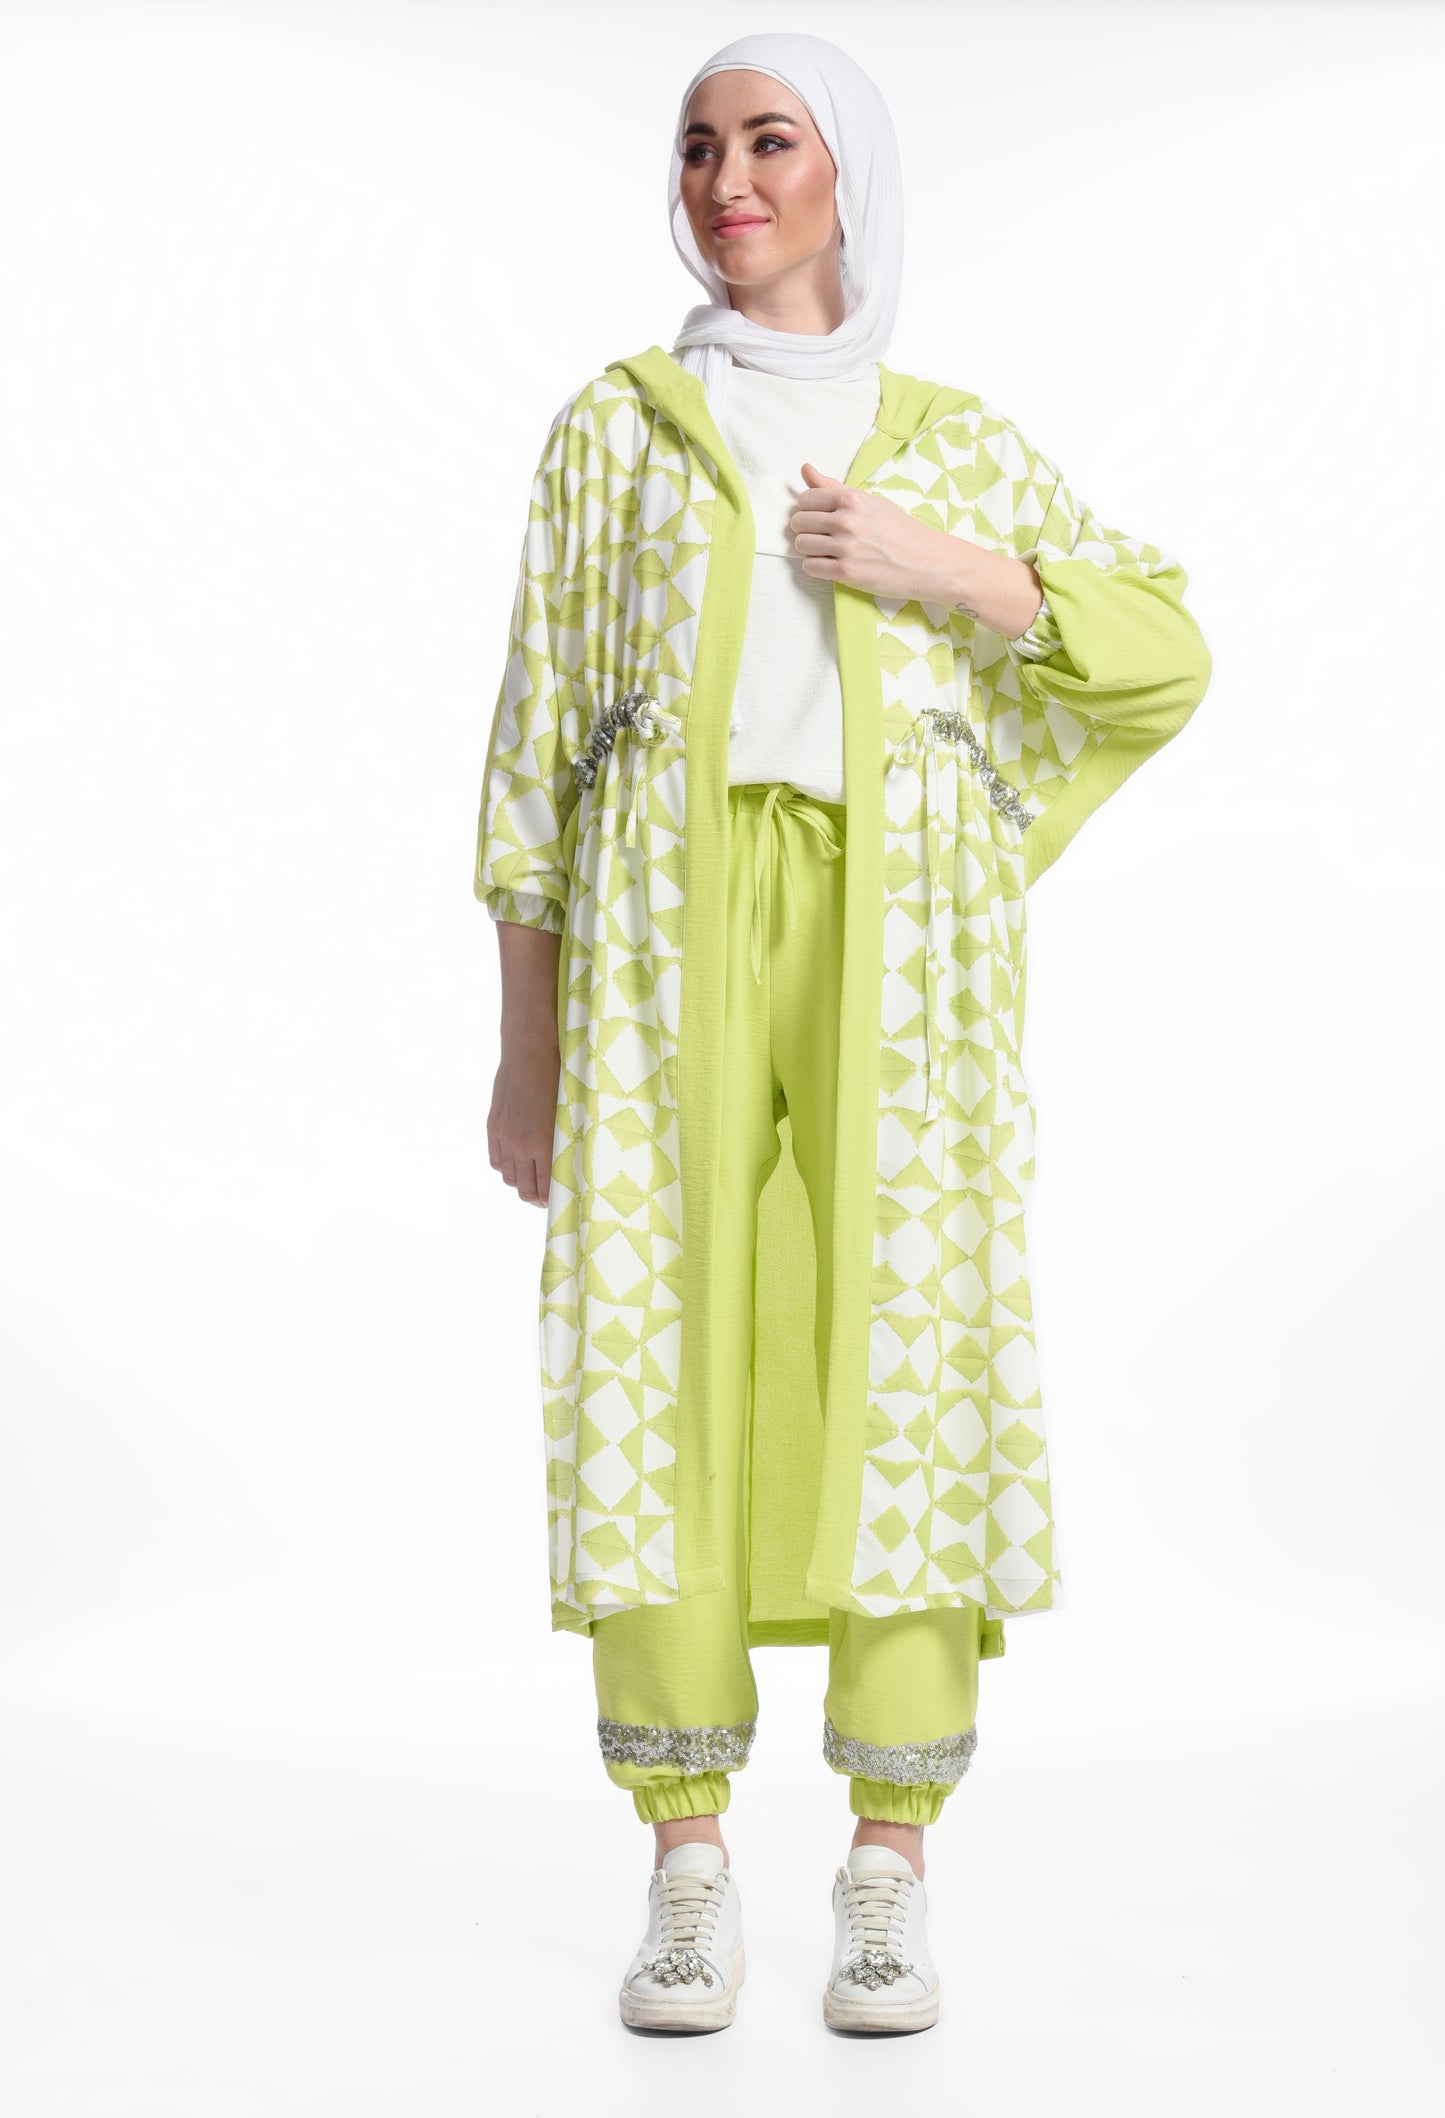 Green lime infused kimono